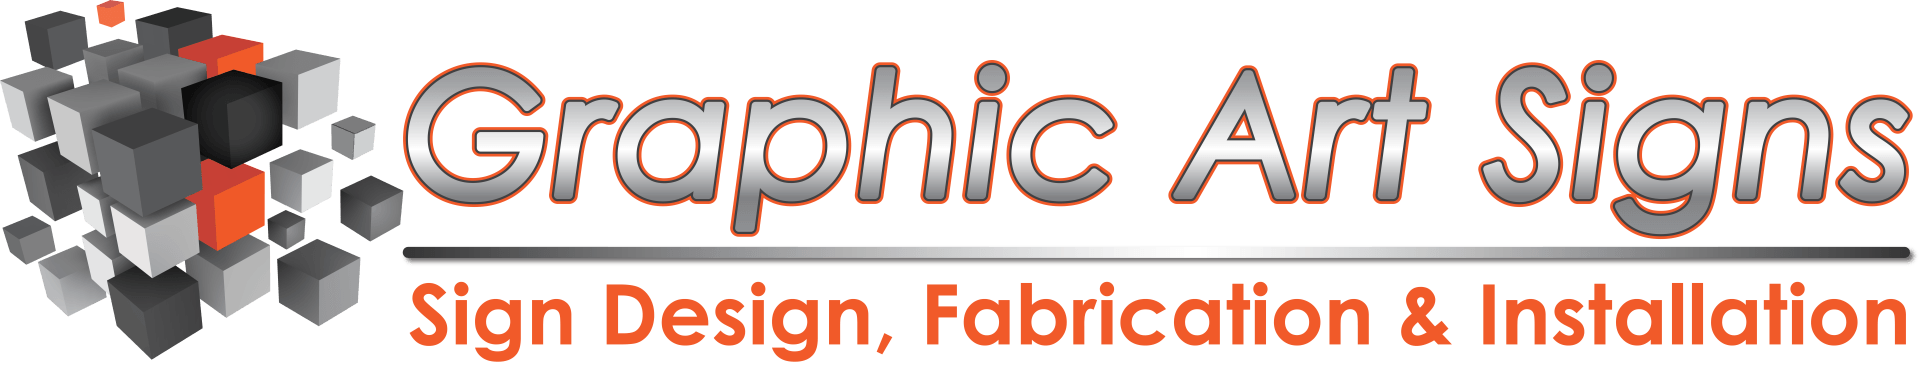 Graphic Art Signs - Sign Design, Fabrication & Installation